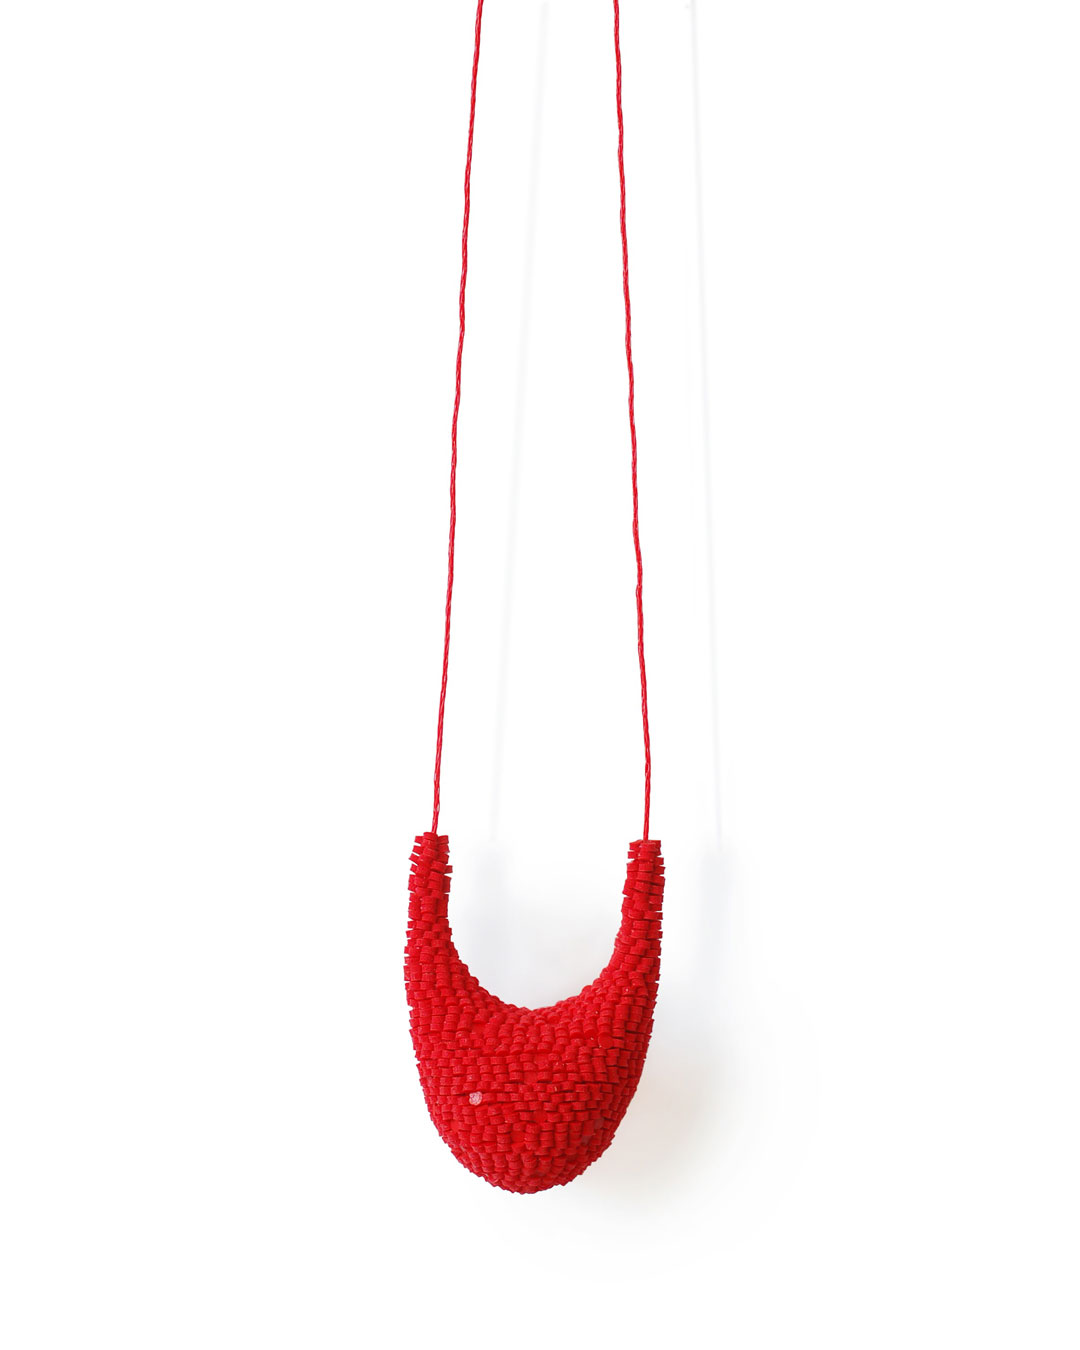 Karin Seufert, untitled, 2015, necklace; PVC, nylon thread, 350 x 45 x 30 mm, €730